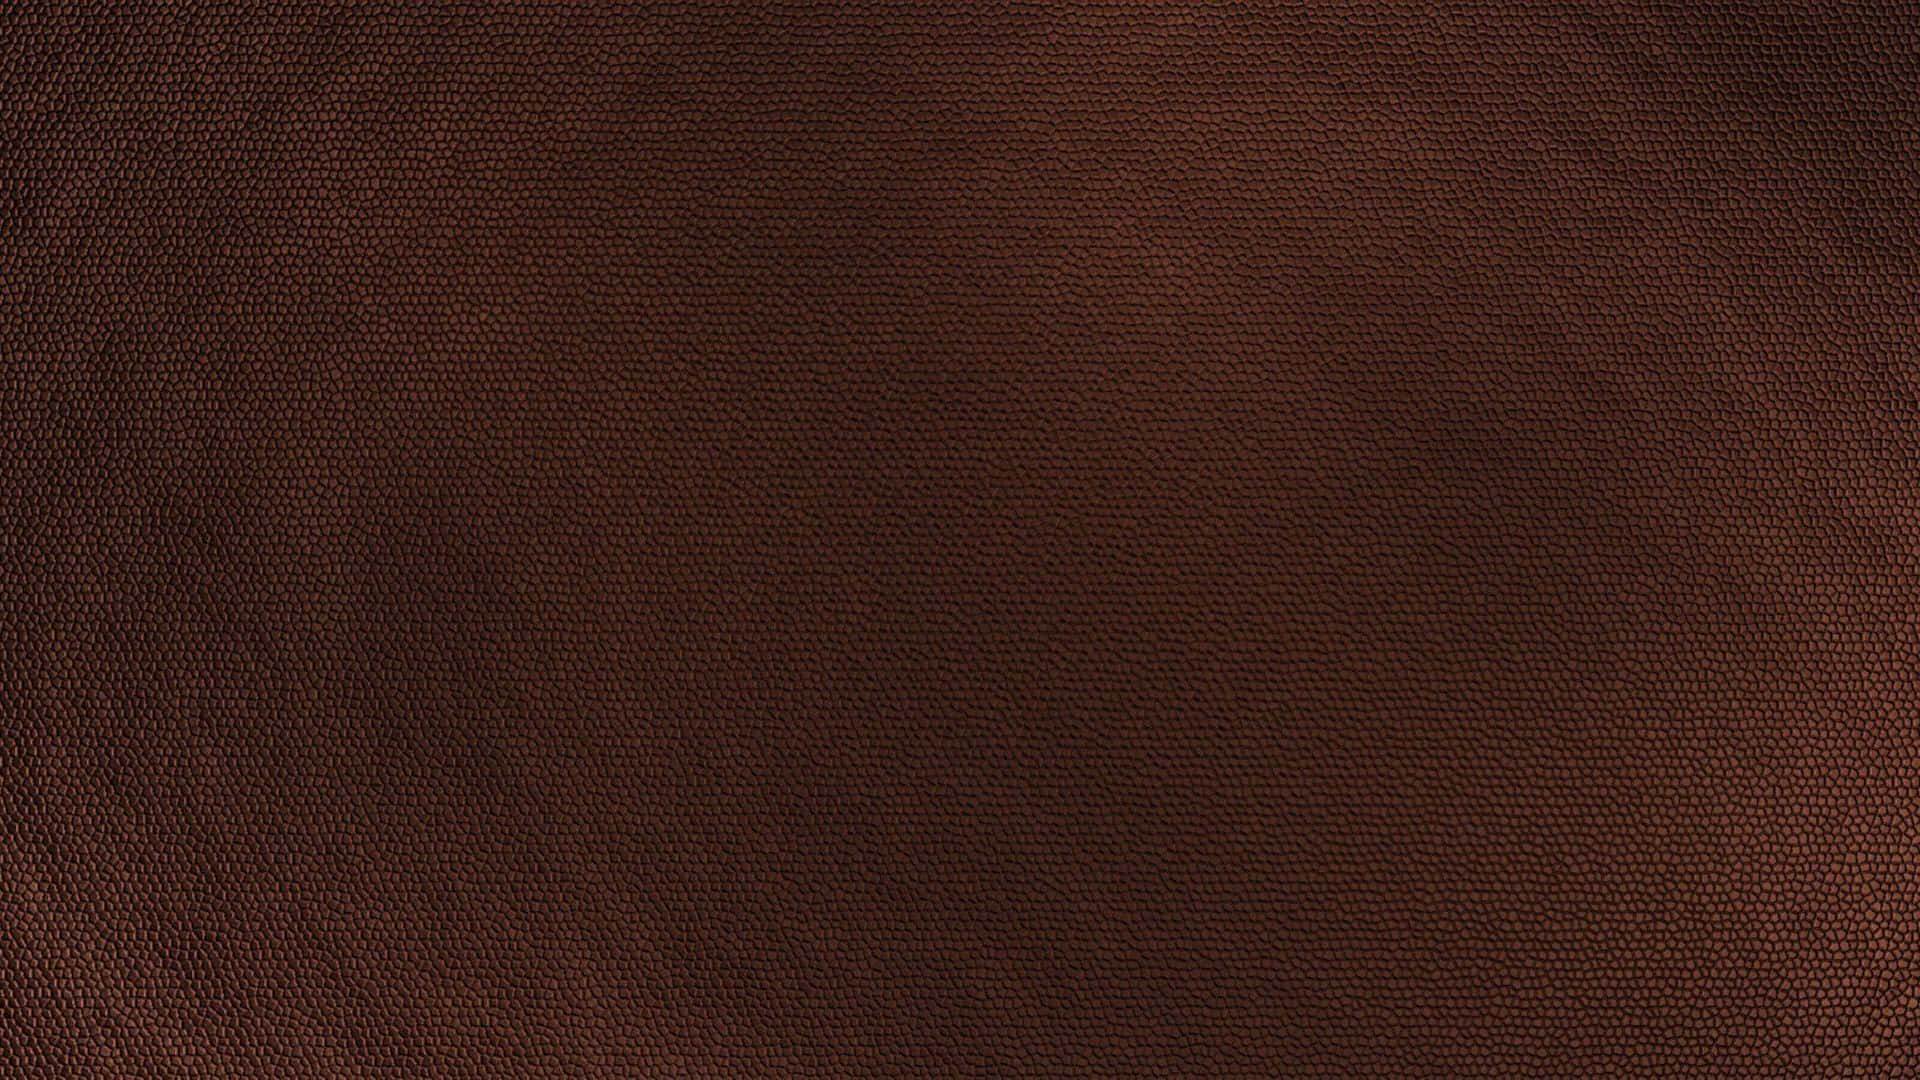 Brown Leather 1920 X 1080 Wallpaper Wallpaper